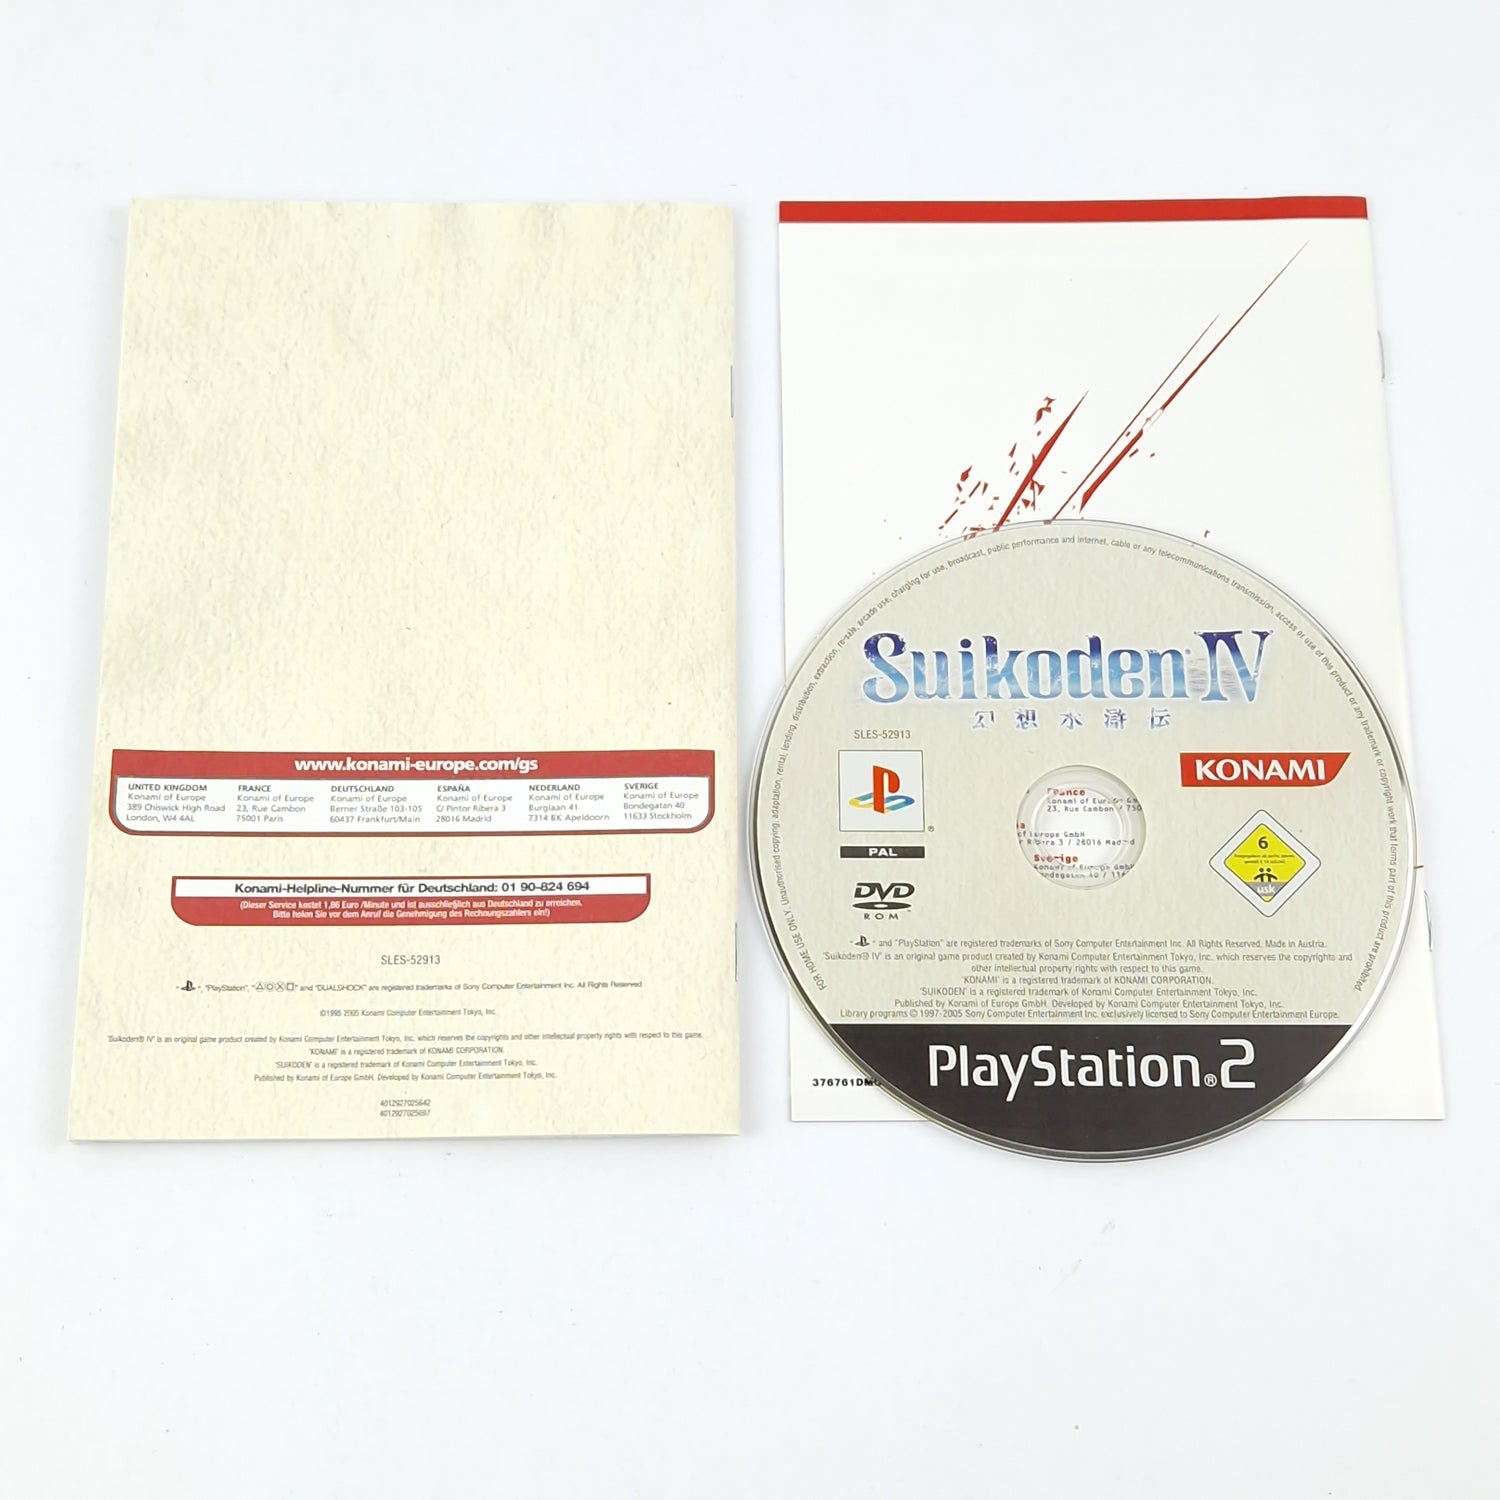 Playstation 2 game: Suikoden IV 4 - CD manual OVP / SONY PS2 Konami PAL